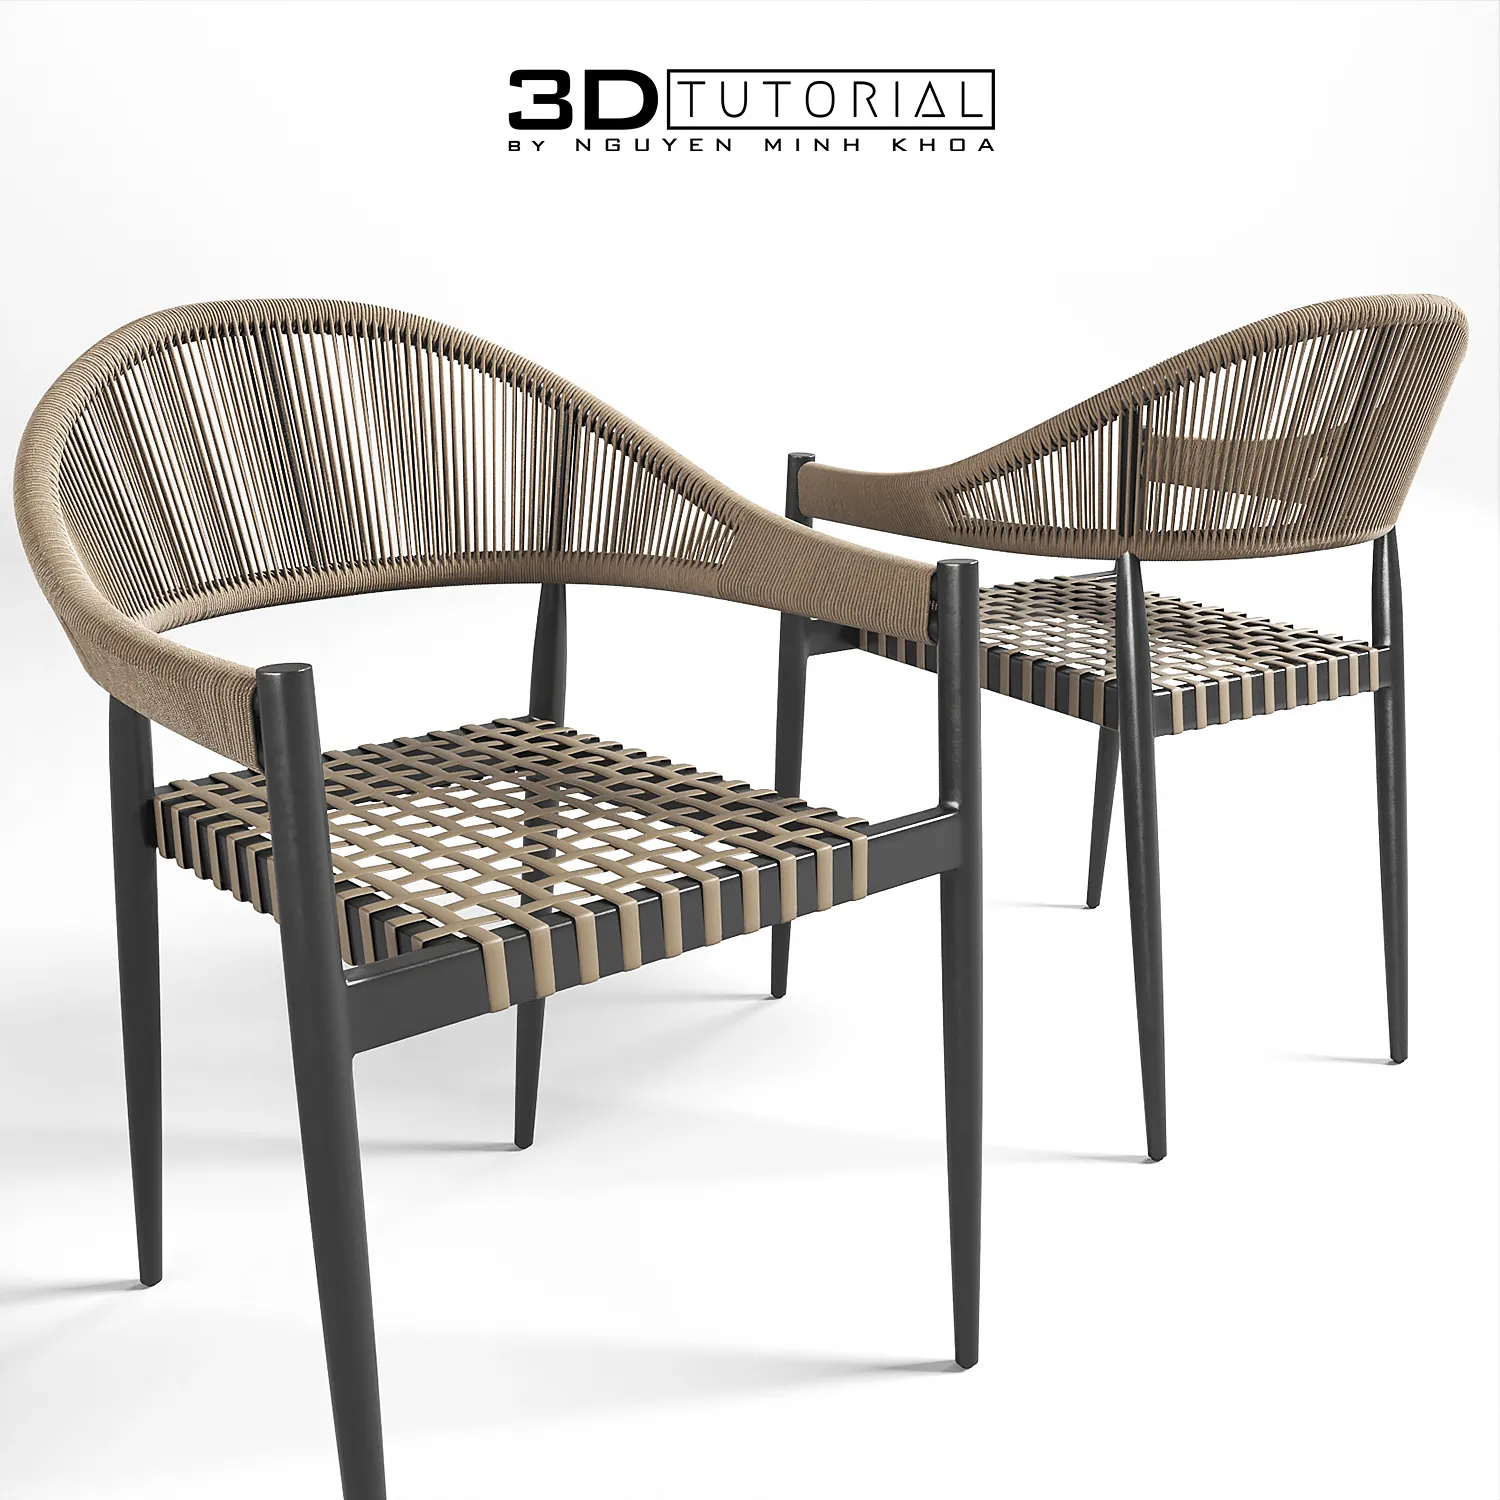 FURNITURE 3D MODELS – Patio Dining Armchair modelbyNguyenMinhKhoa